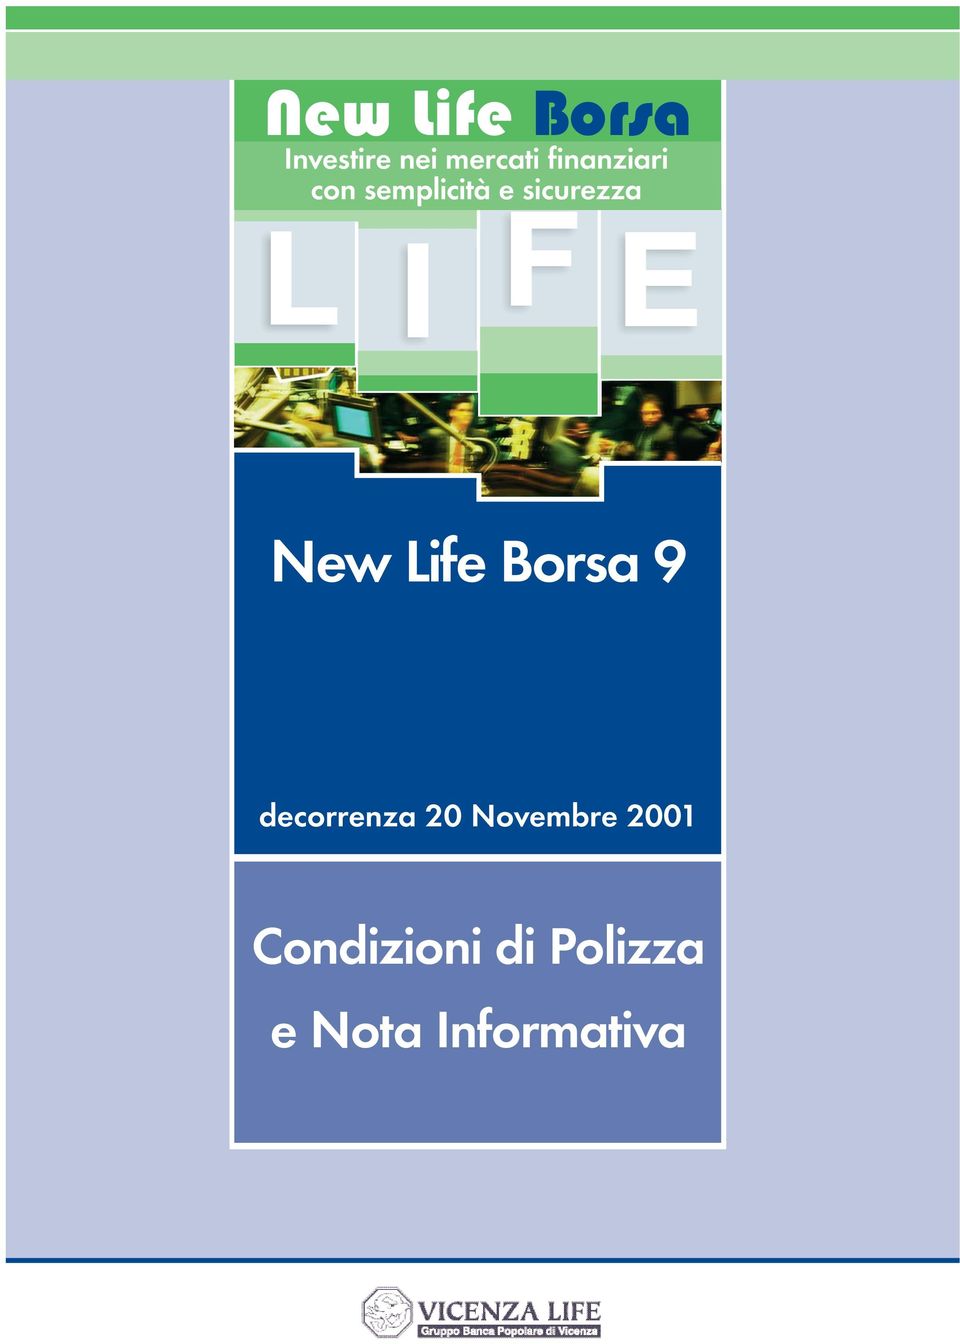 New Life Borsa 9 decorrenza 20 Novembre